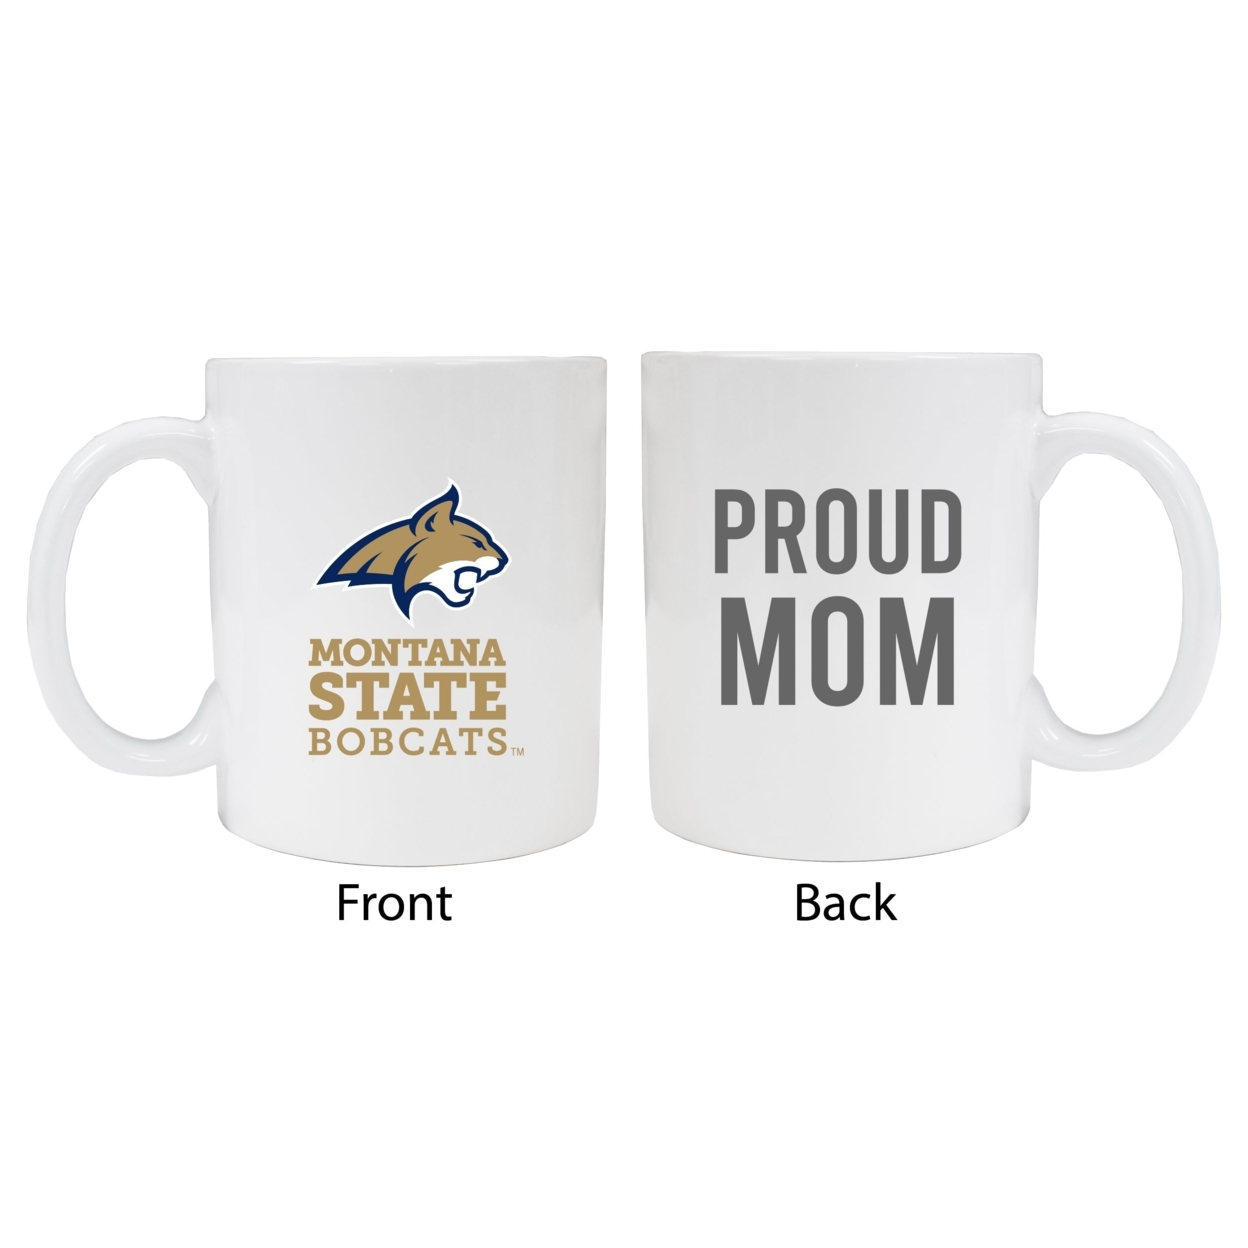 Montana State Bobcats Proud Mom Ceramic Coffee Mug - White (2 Pack)